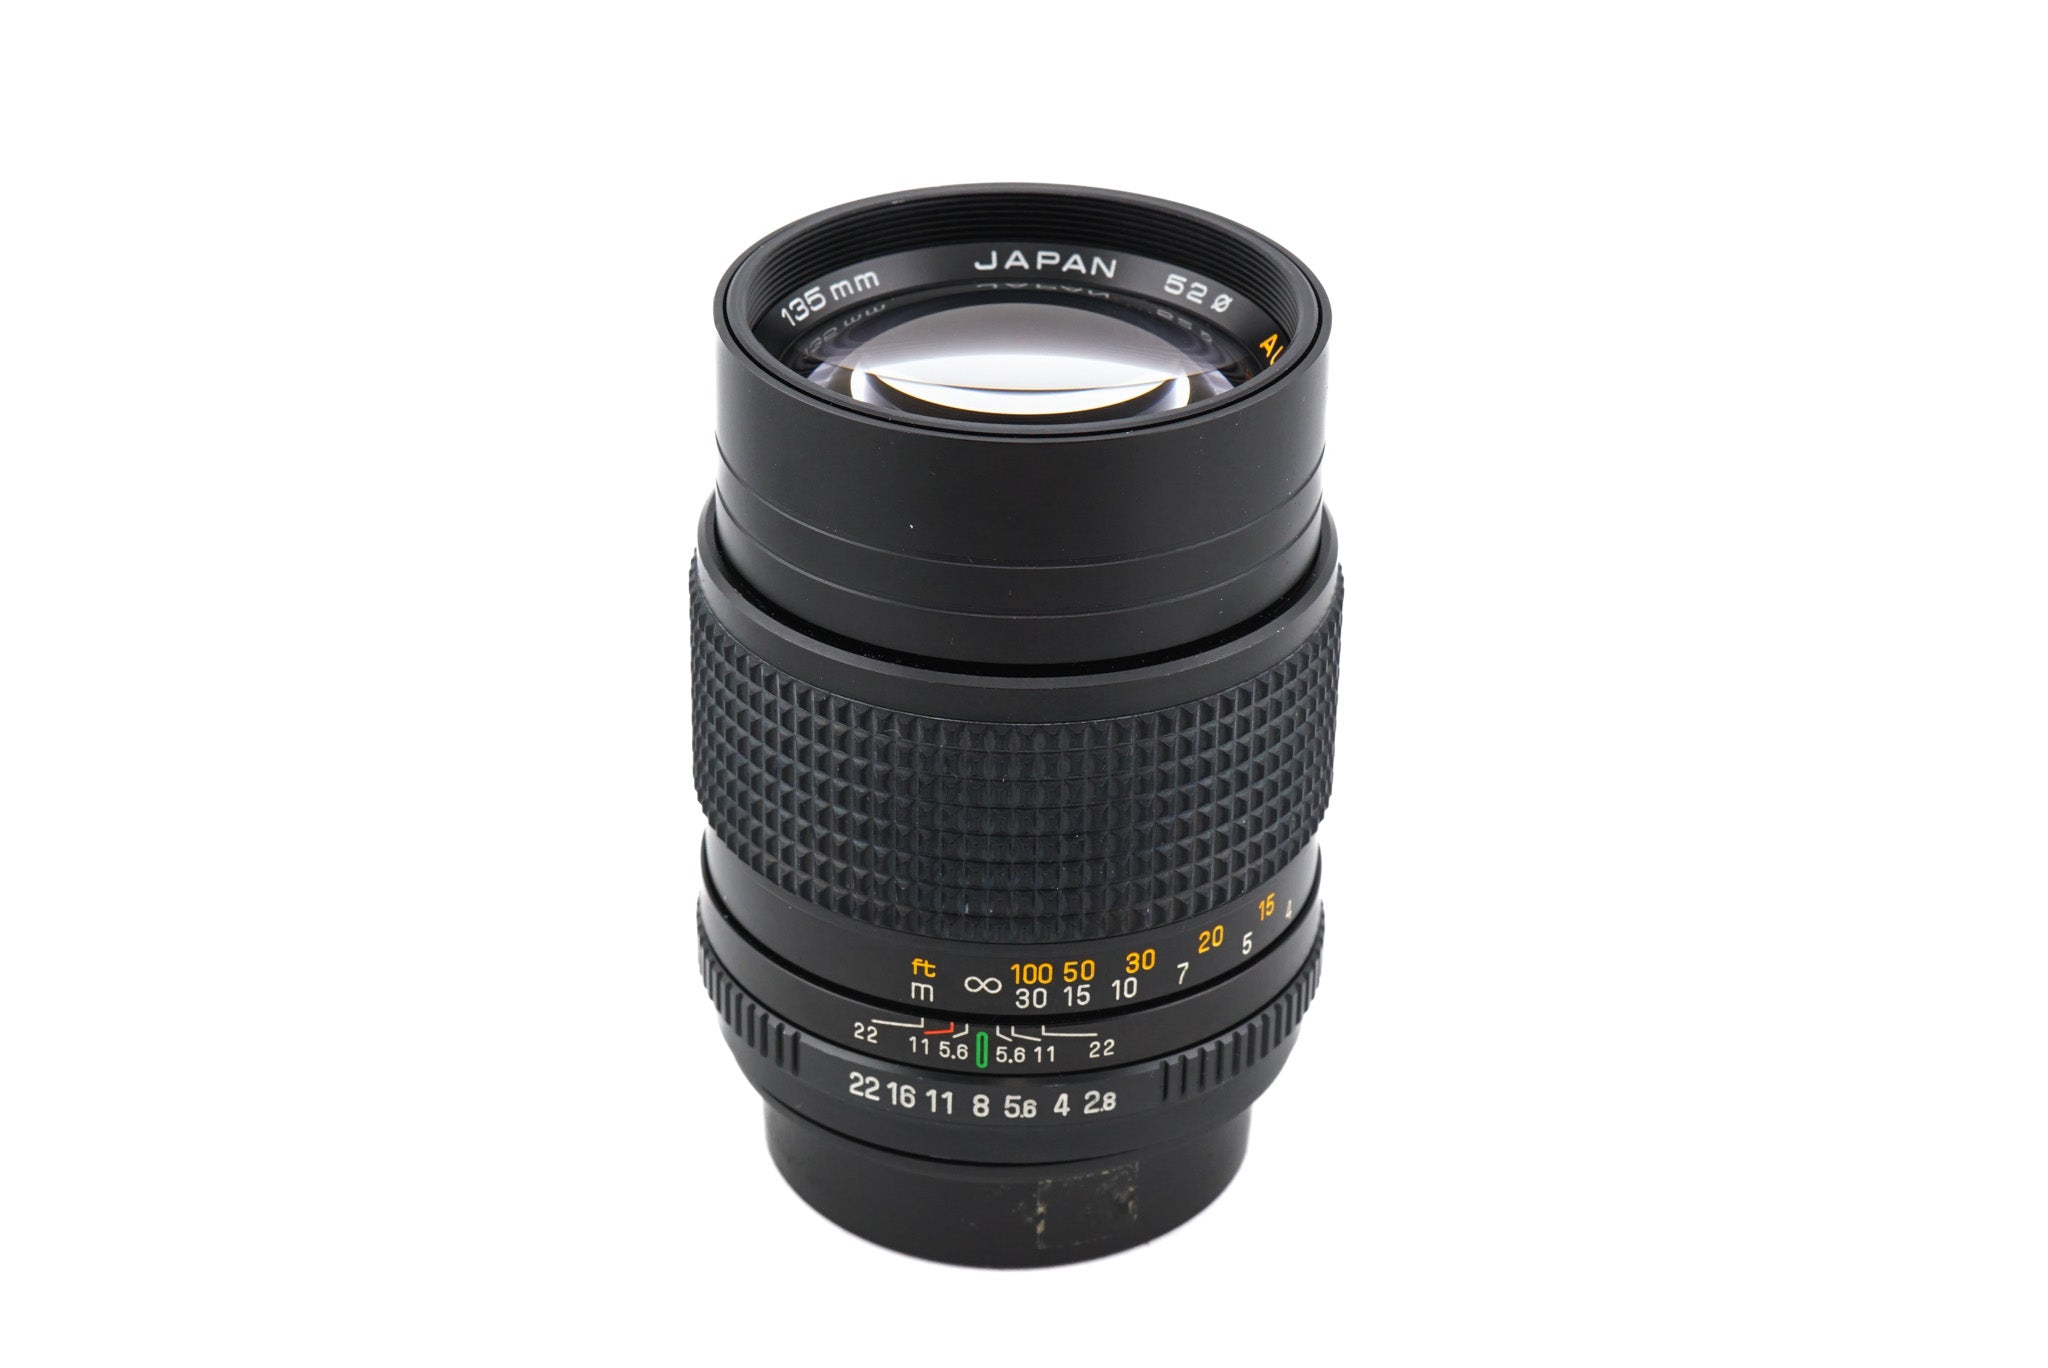 Pentax 35mm f2.8 SMC Pentax-M - Lens – Kamerastore